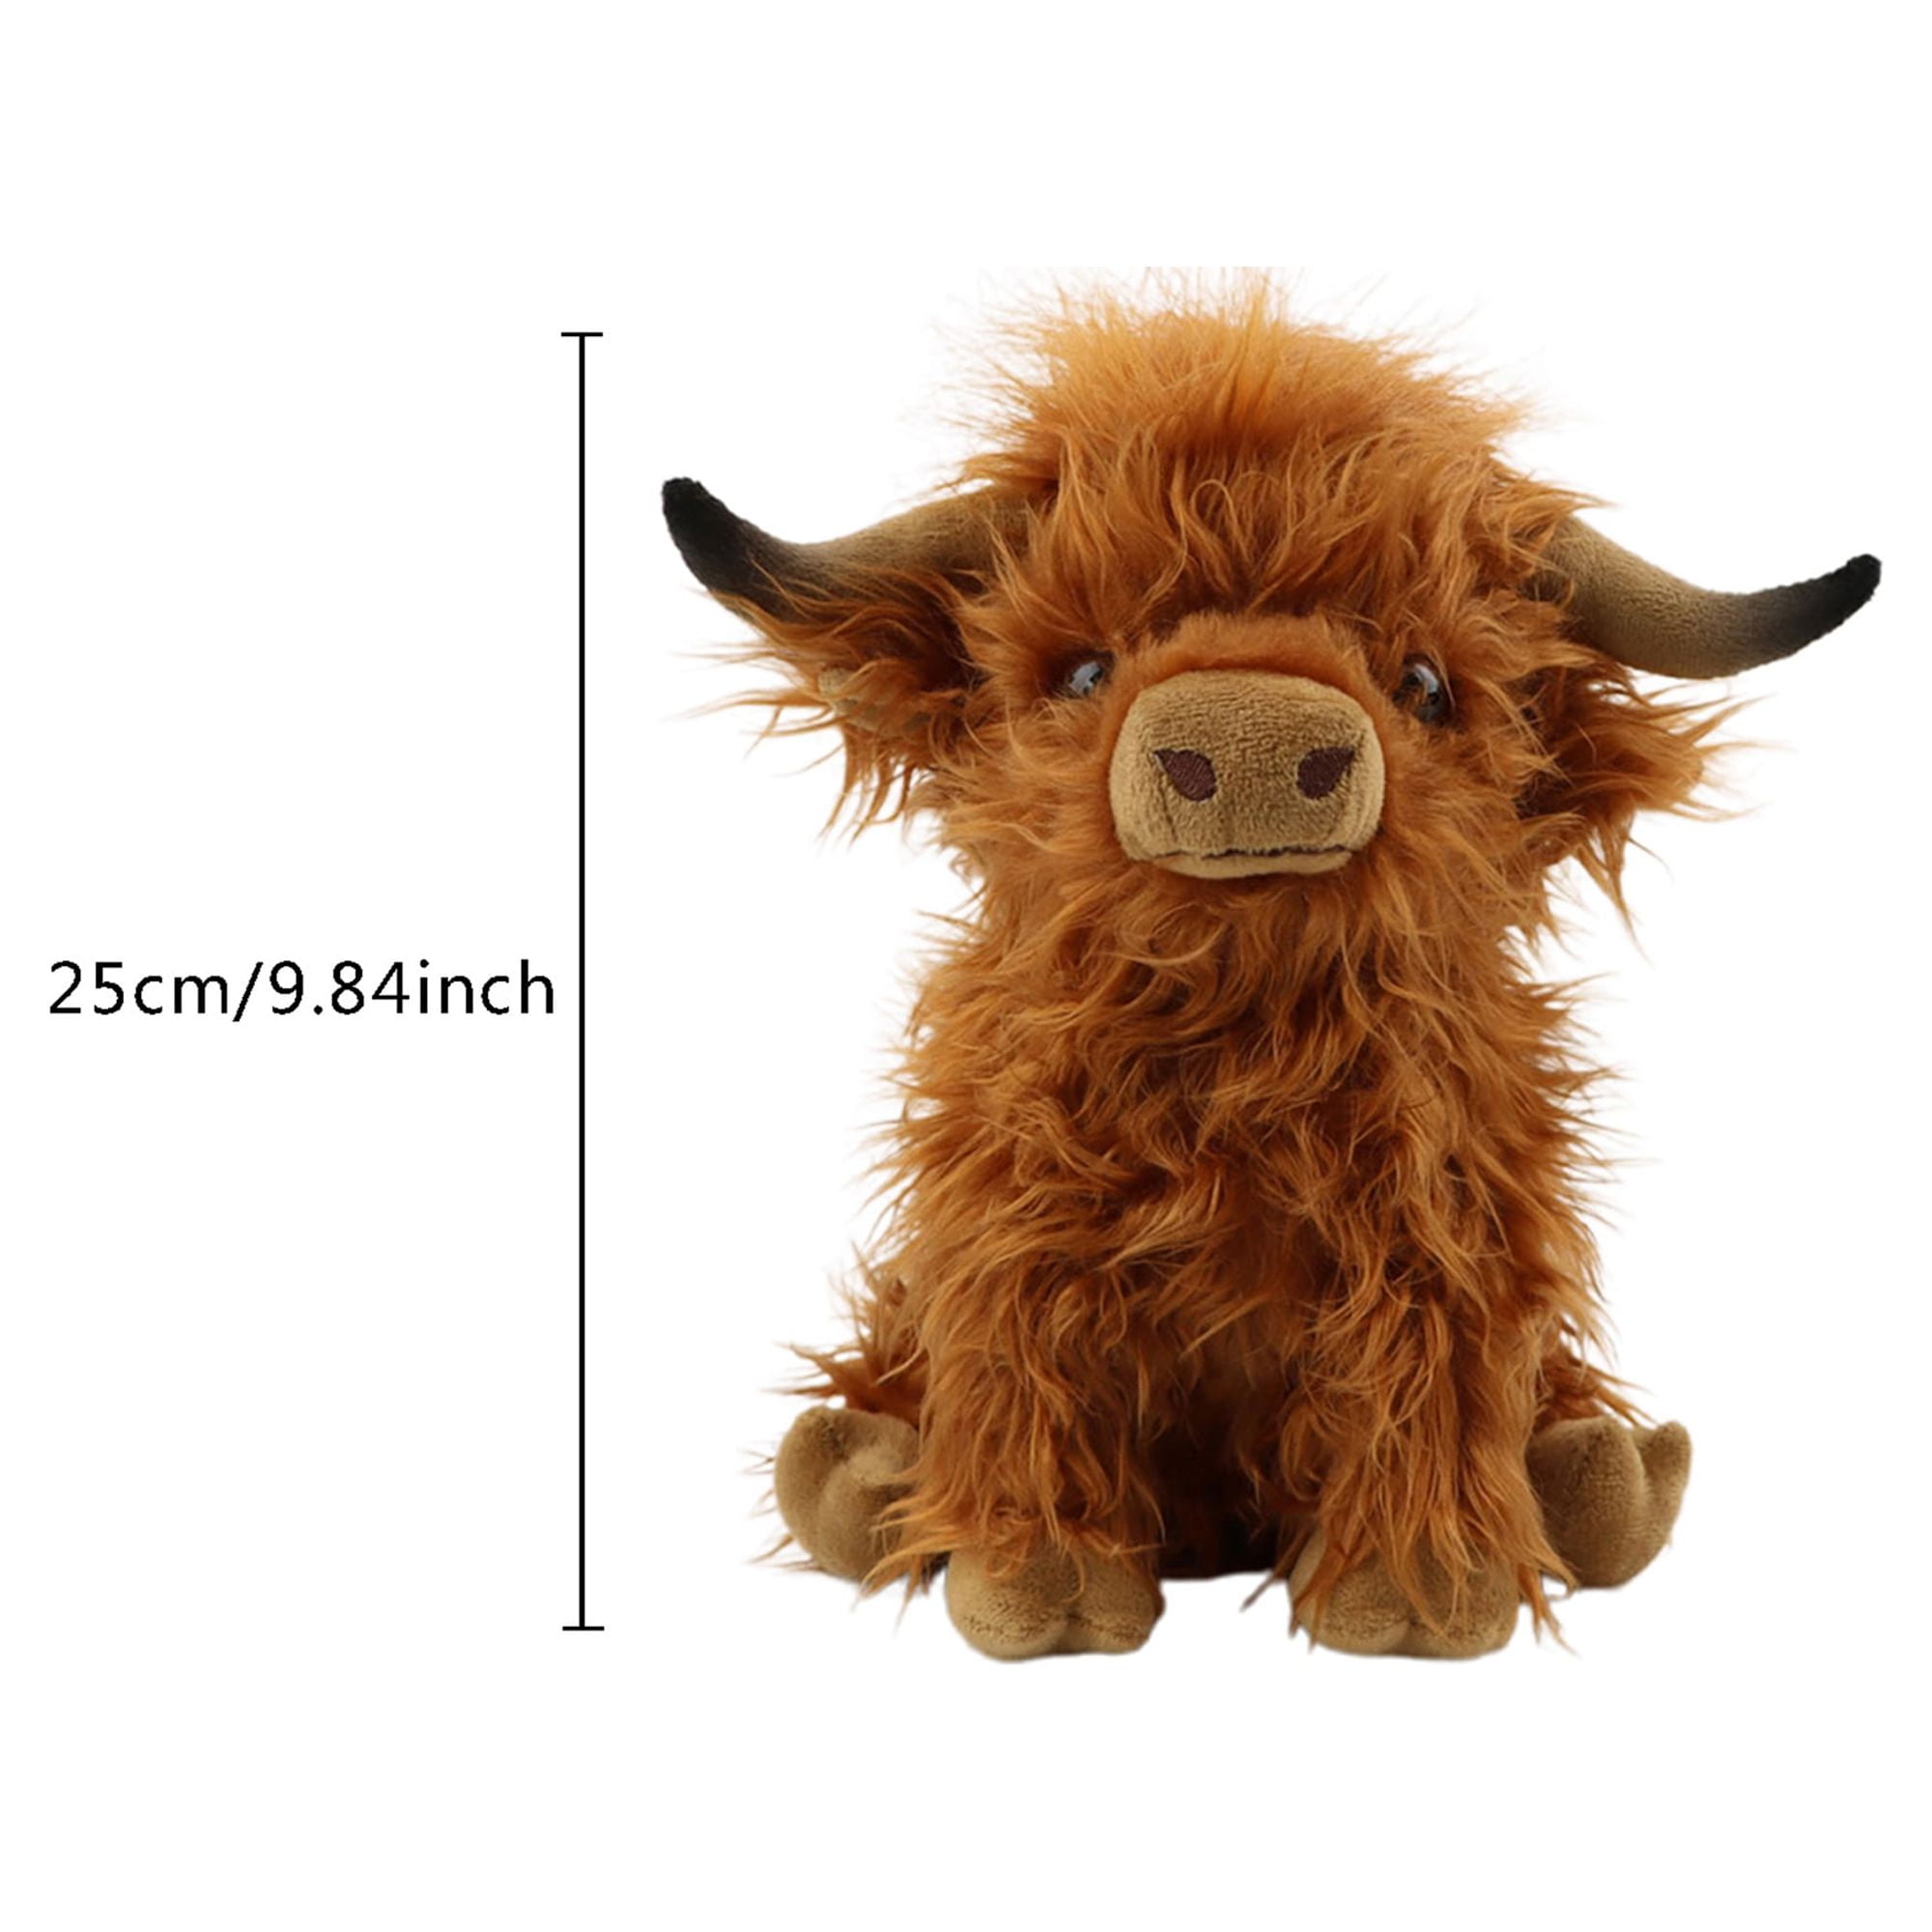  CYISONAL Highland Cow Stuffed Animals Plush Toy Fluffy Bull  Animal Doll Soft Gift for Kids Boys Girls, 10 inch Tall : Toys & Games